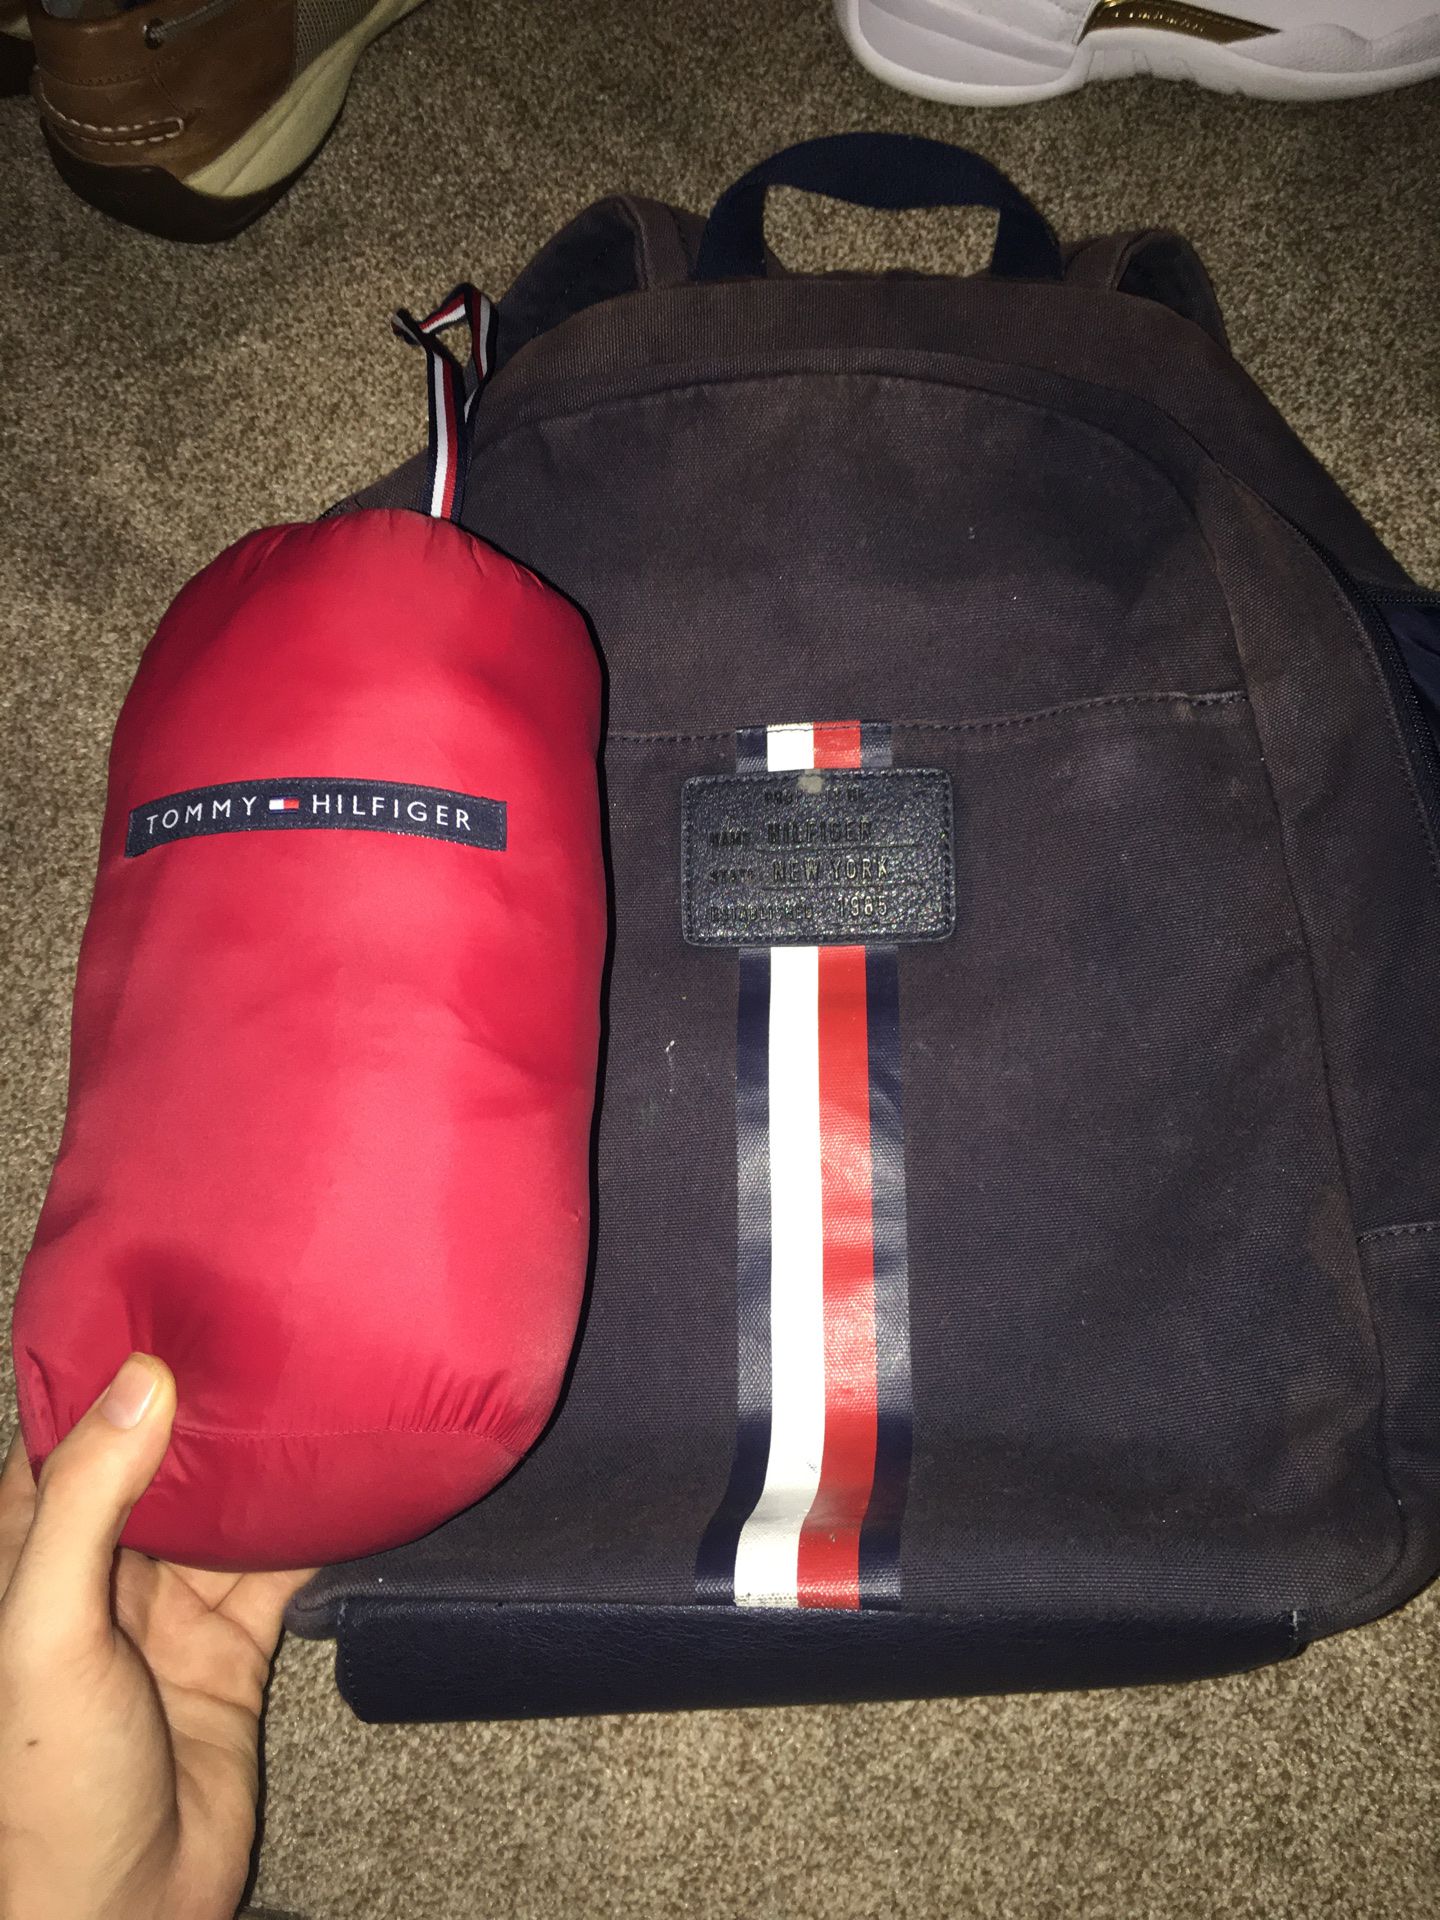 Tommy Hilfiger packable jacket AND Tommy Hilfiger backpack